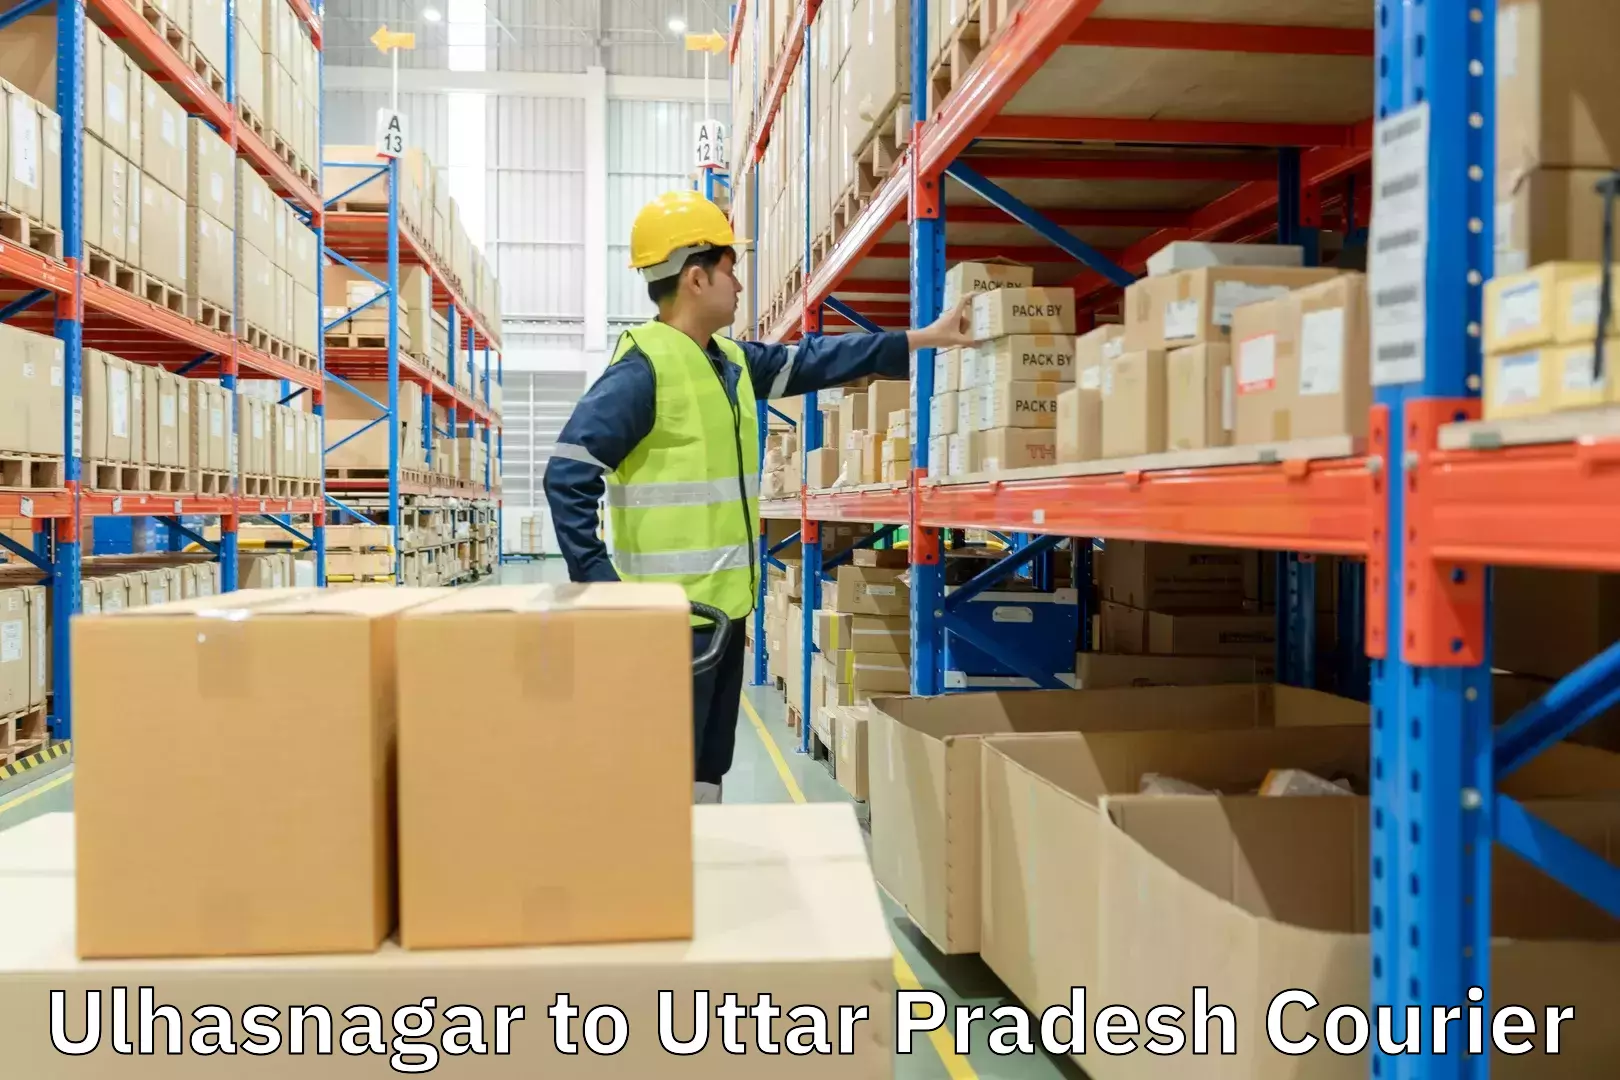 Business shipping needs Ulhasnagar to Uttar Pradesh